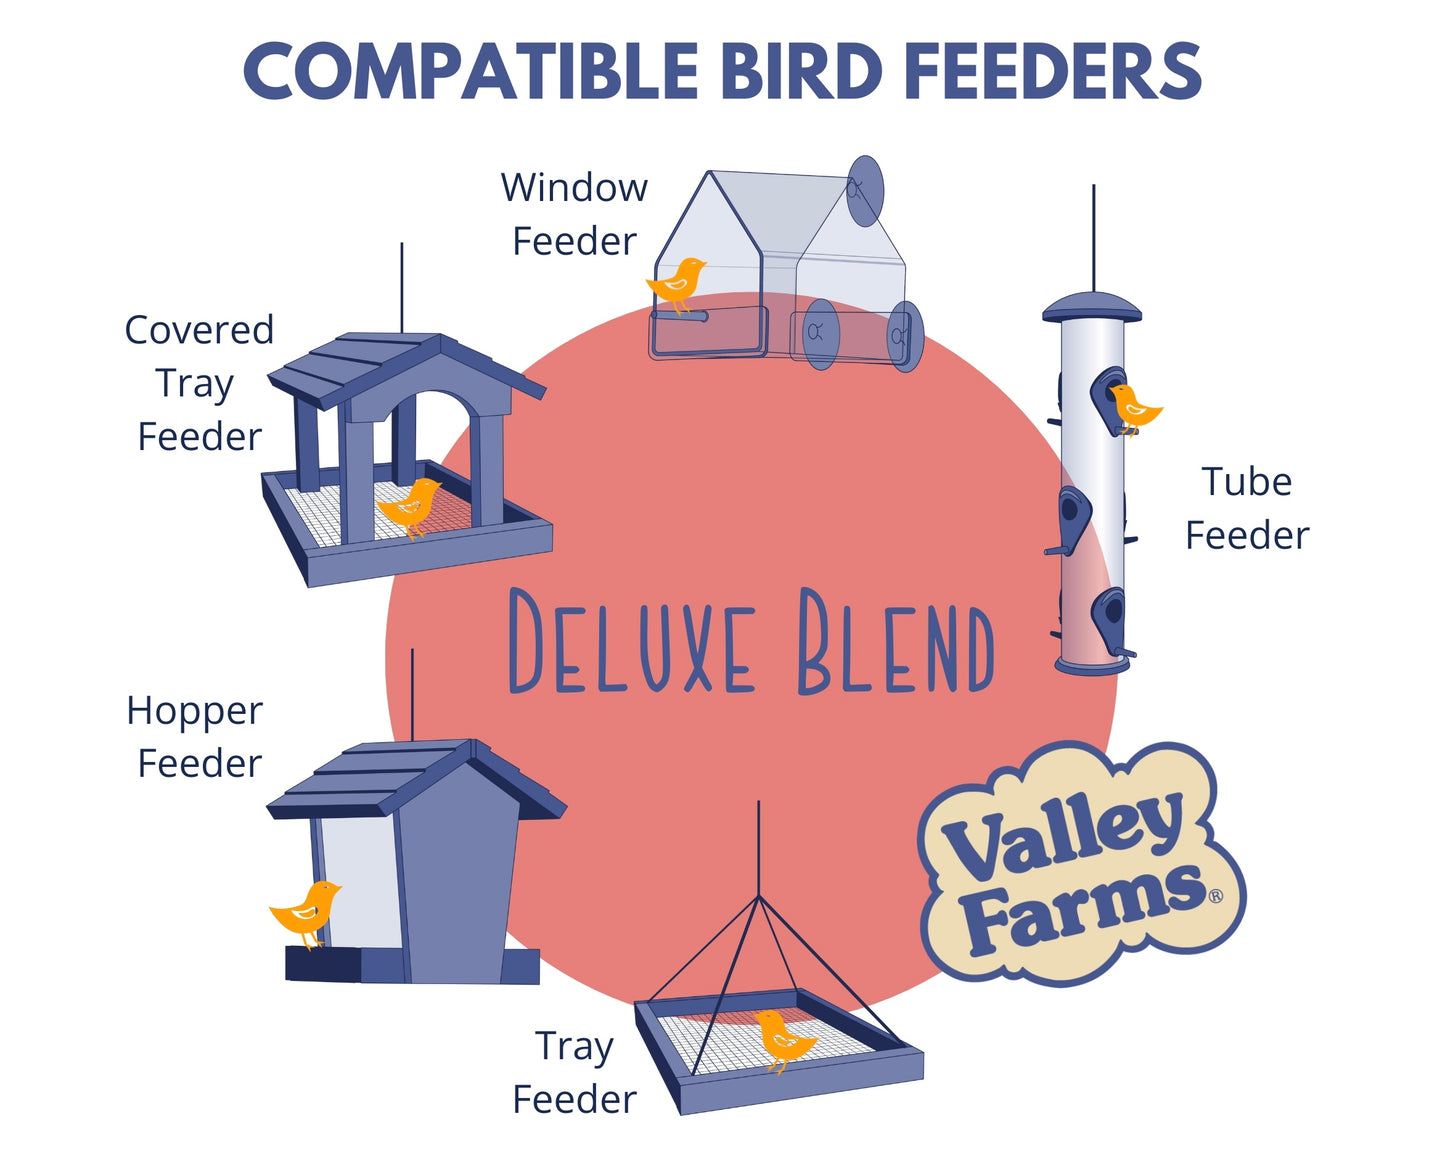 Valley Farms Deluxe Wild Bird Food